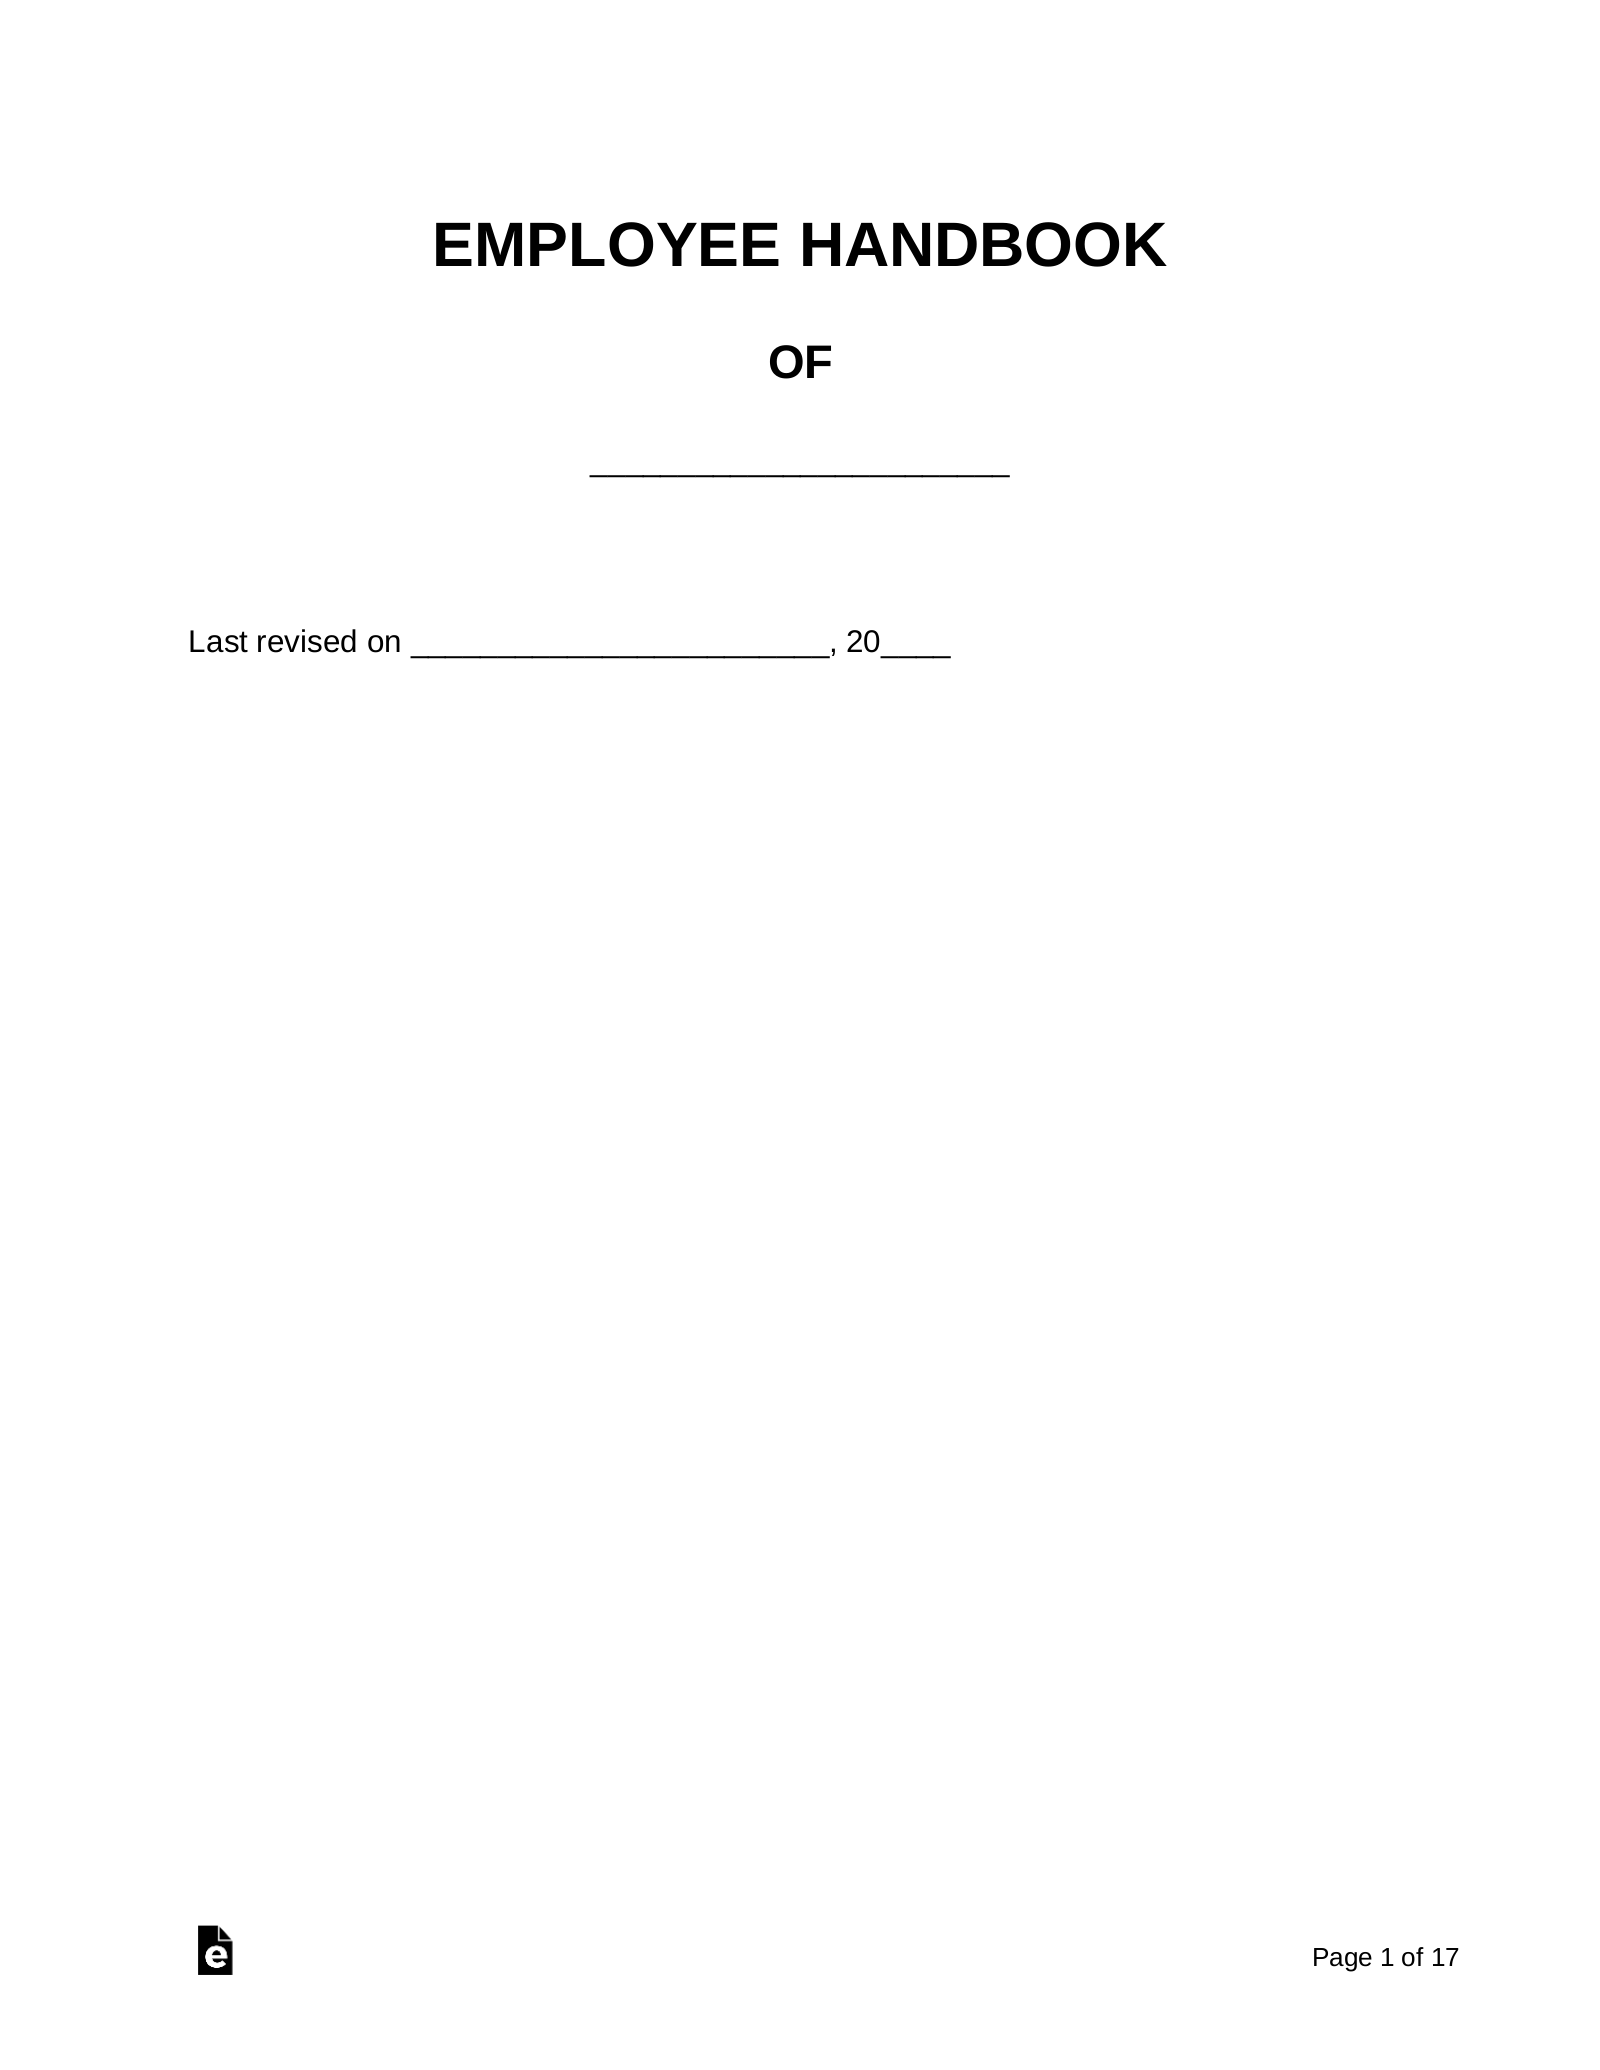 Employee Handbook Templates (7)